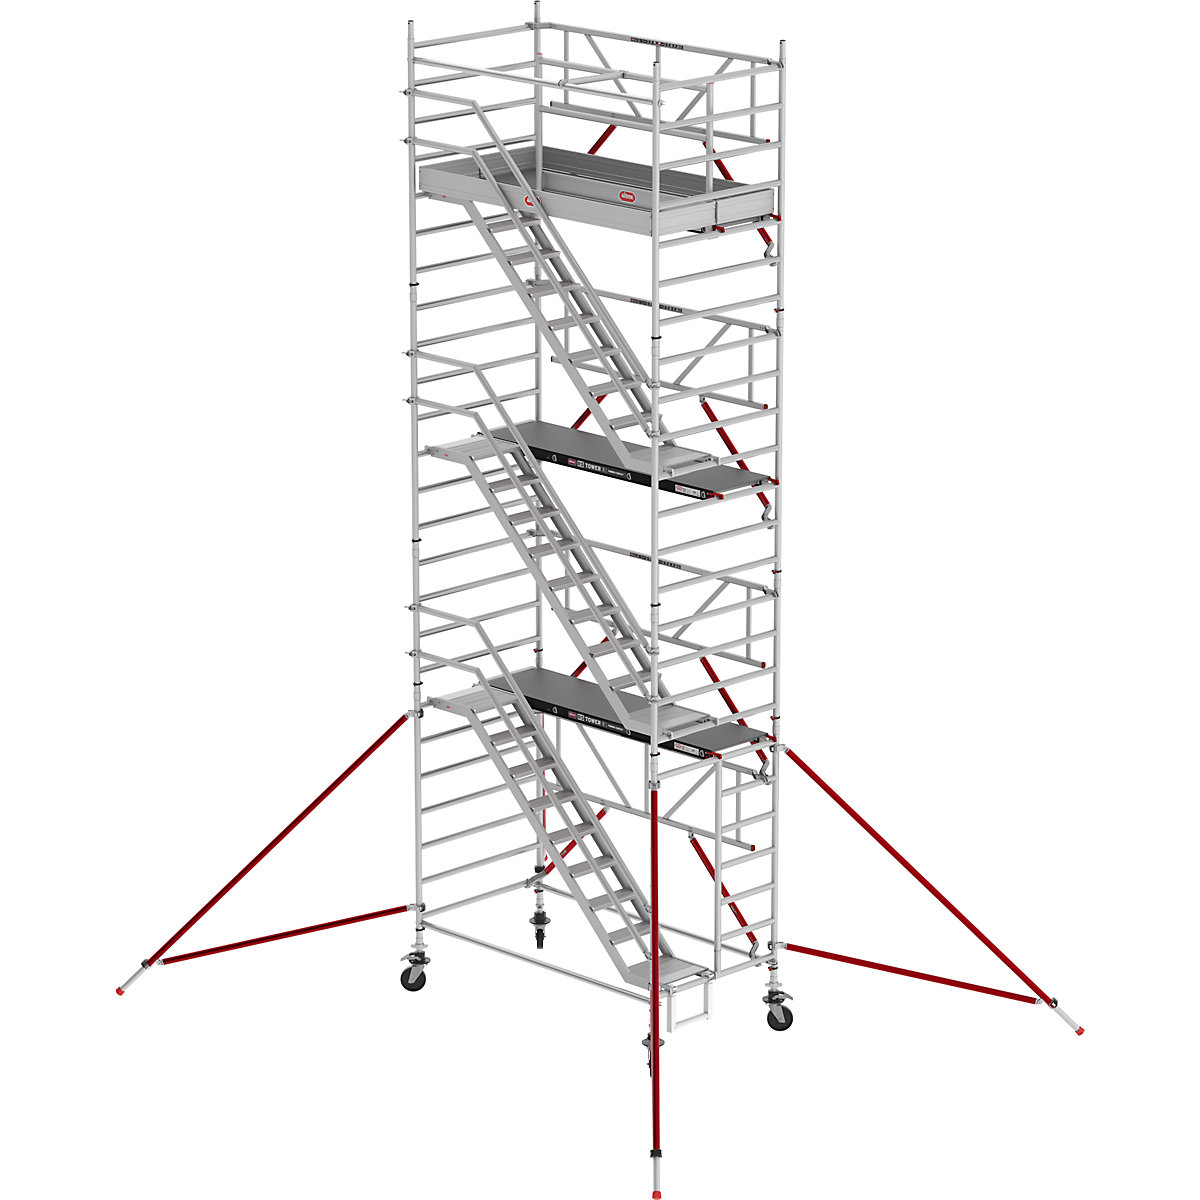 Oder s stopnicami RS TOWER 53, širok – Altrex, lesena ploščad, dolžina 2,45 m, delovna višina 8,20 m